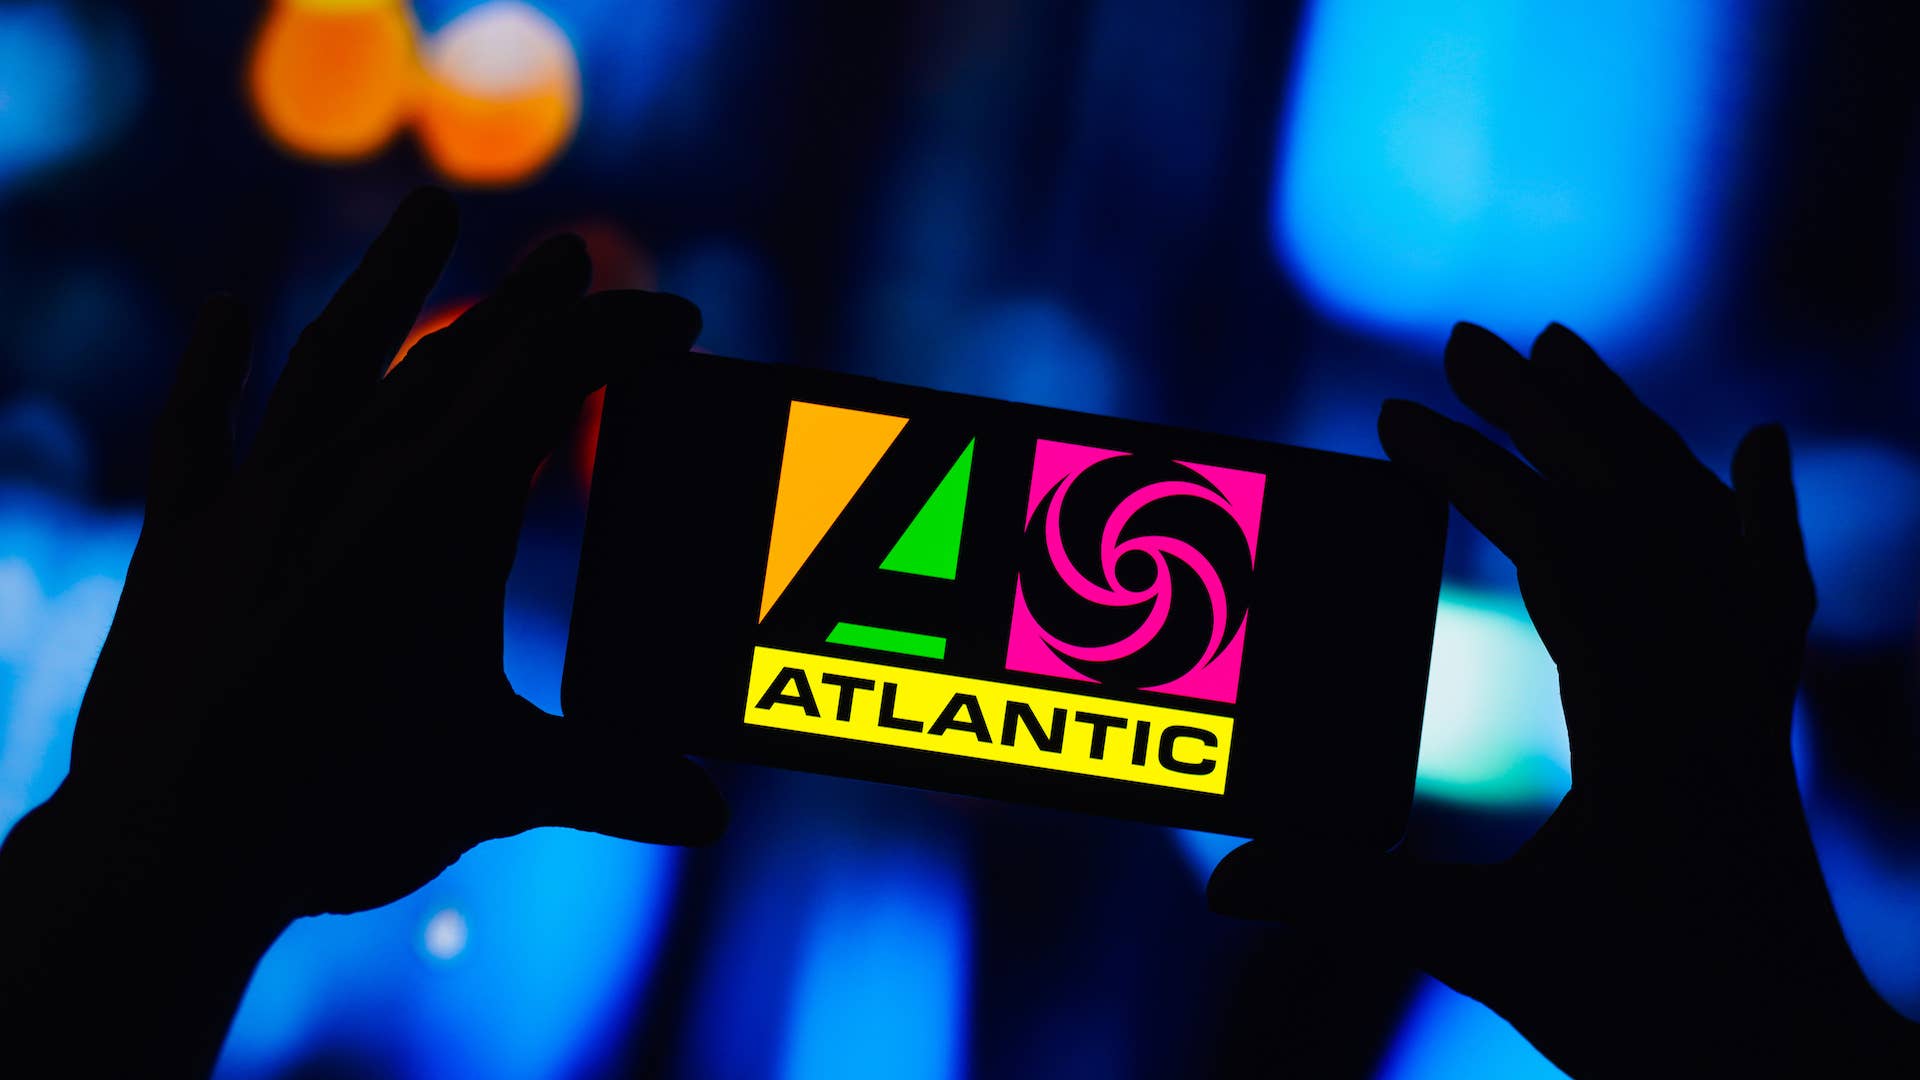 atlantic records logo png